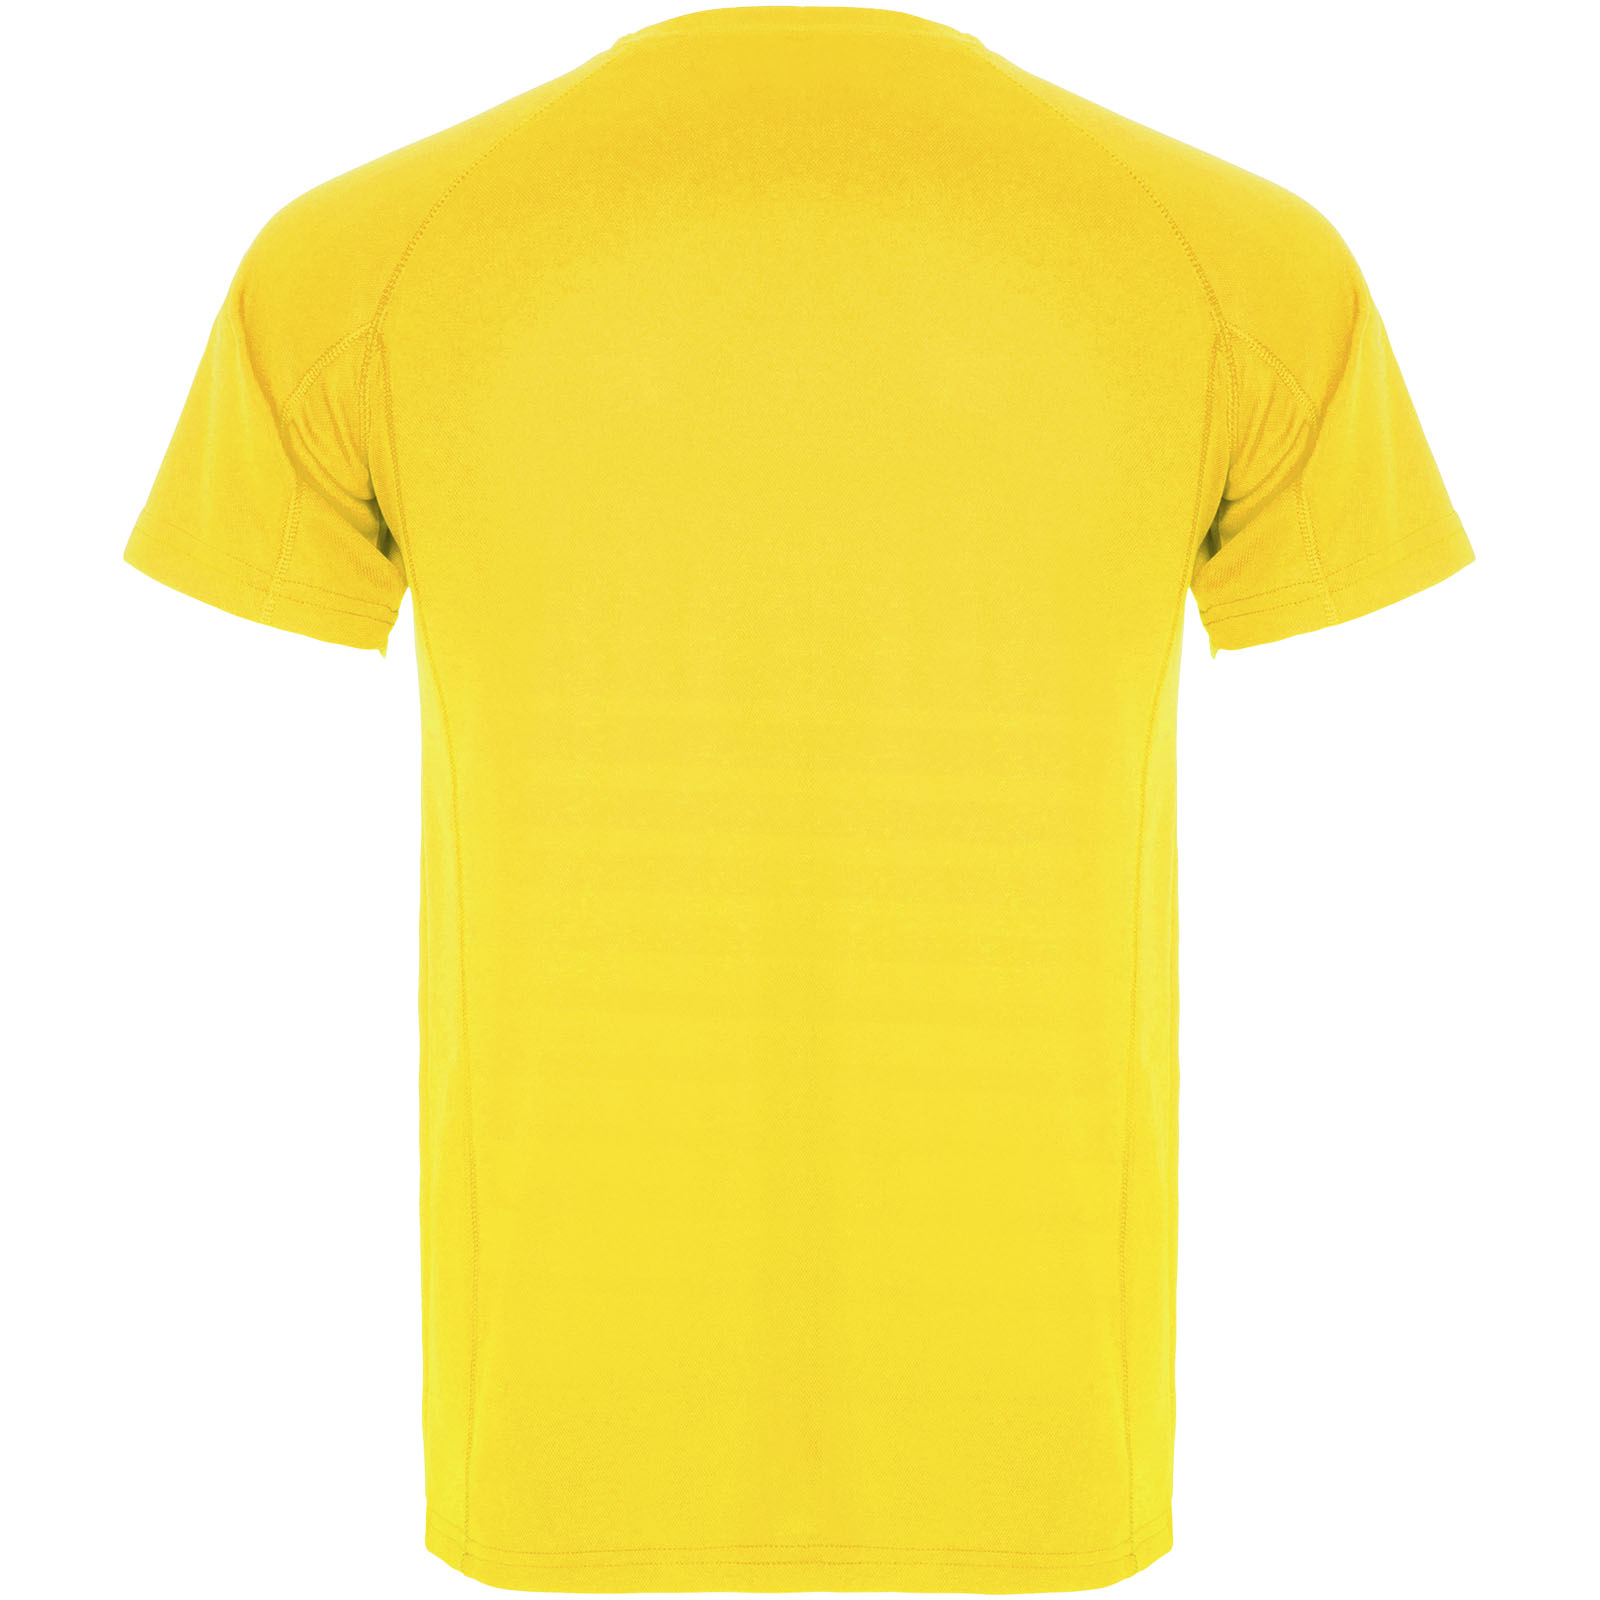 Advertising T-shirts - Montecarlo short sleeve men's sports t-shirt - 1